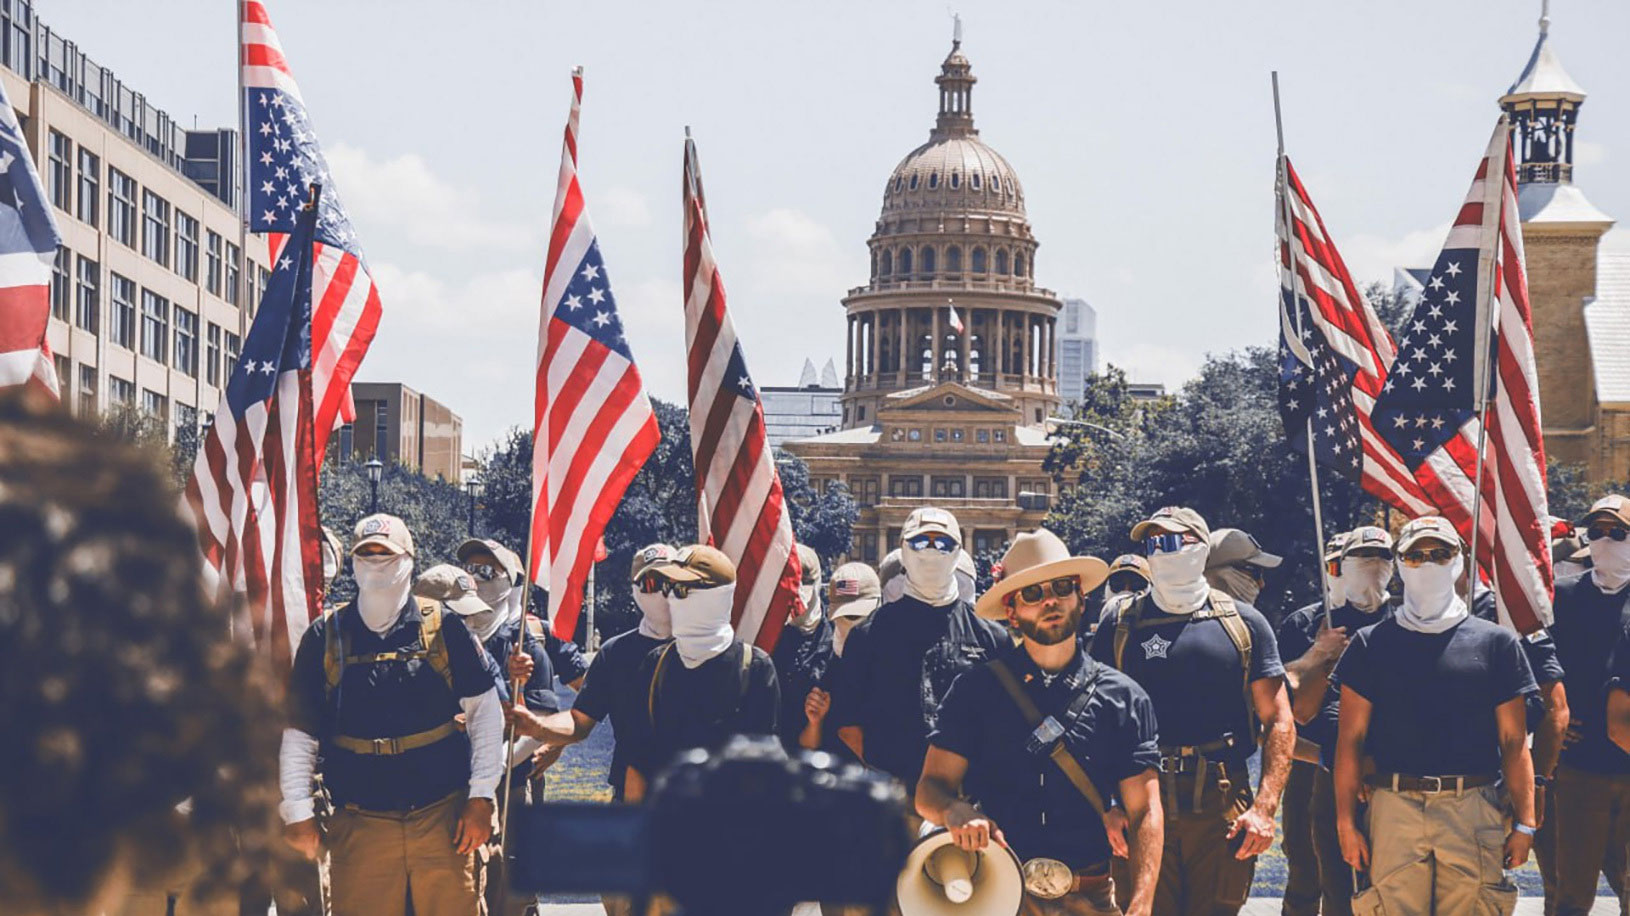 Texas Rangers' history of violence toward people of color often hidden